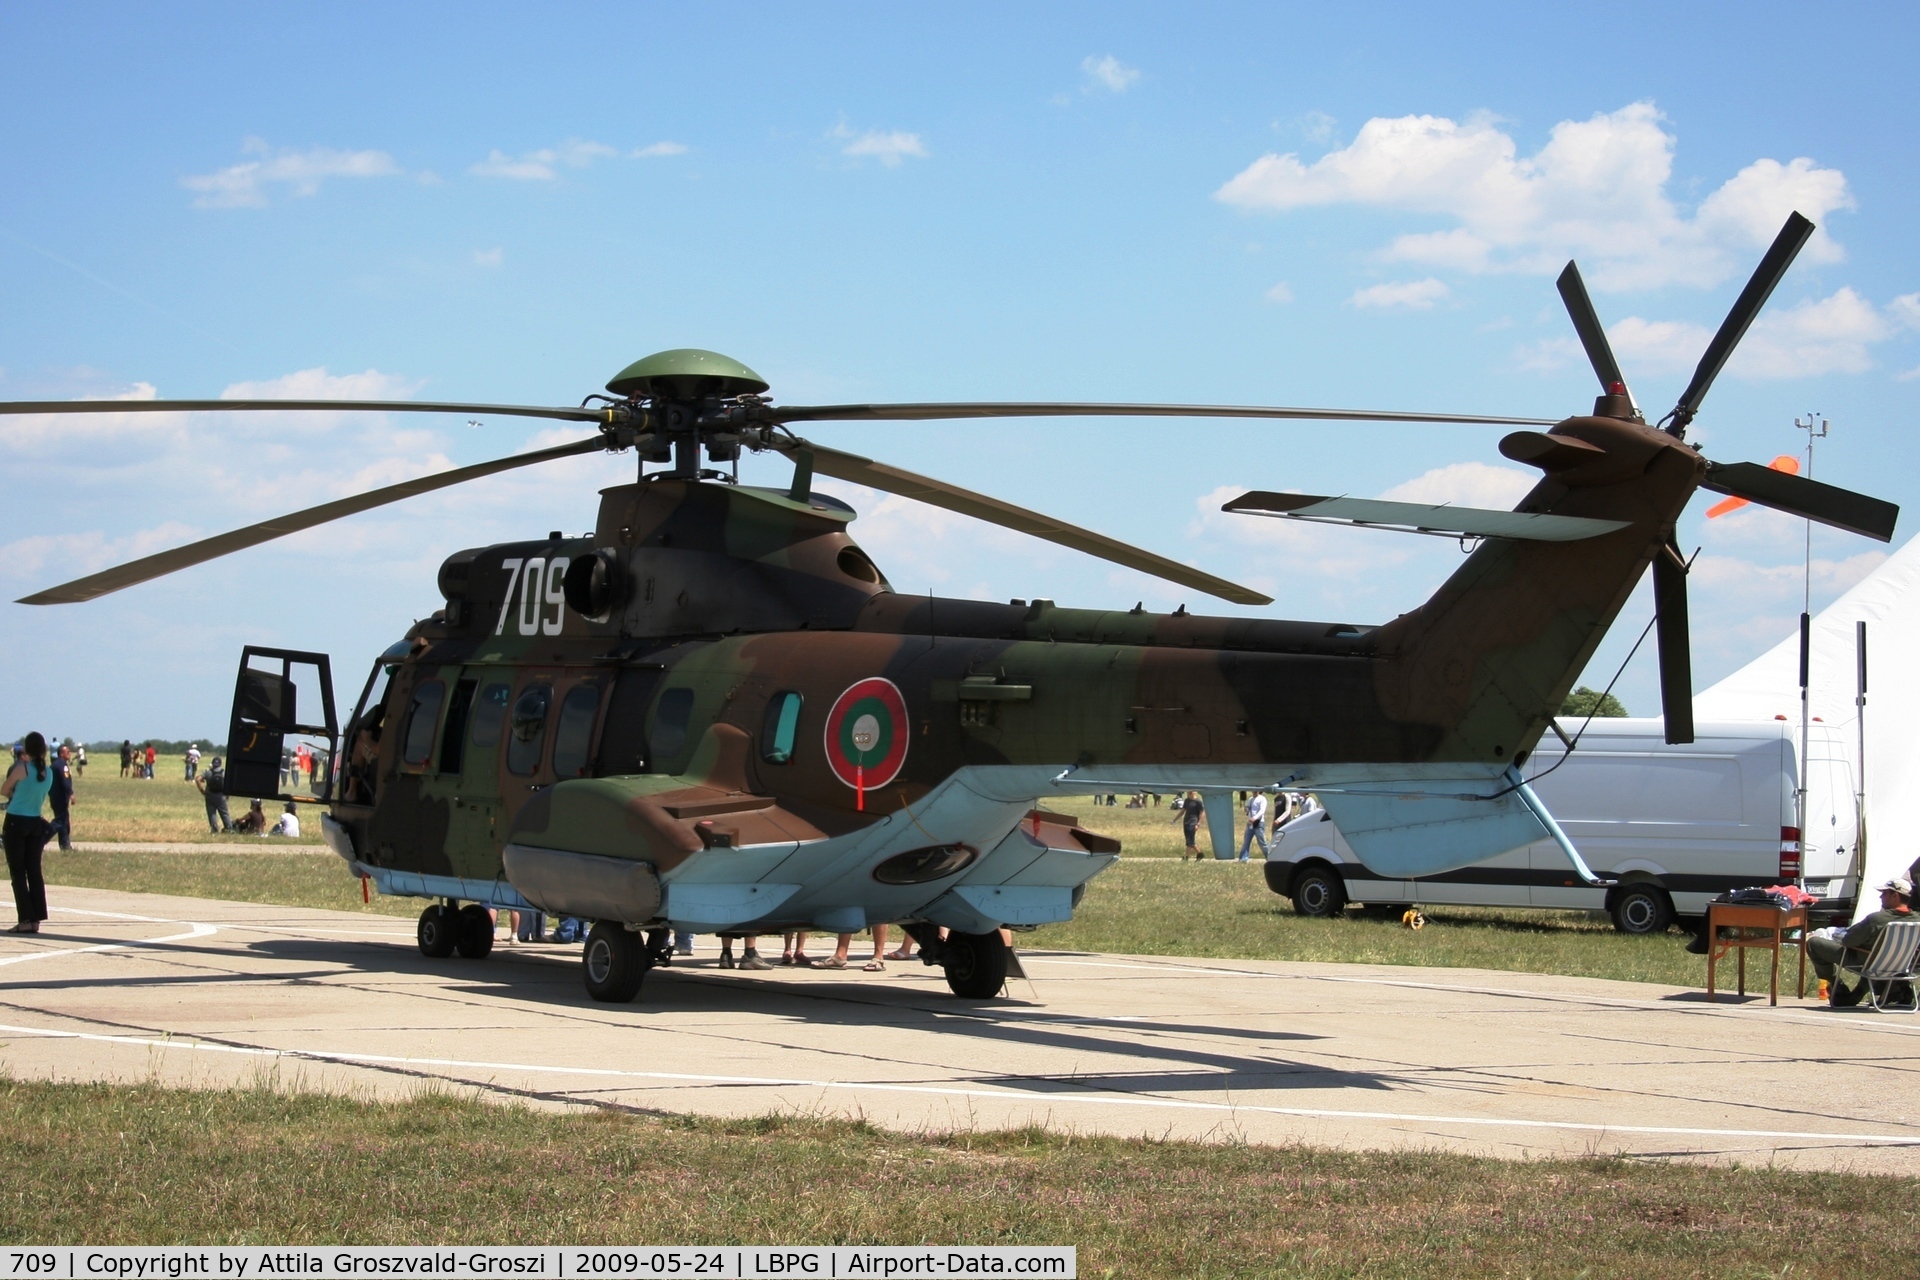 709, 2008 Eurocopter AS-532AL Cougar C/N 2711, BIAF 09 Bulgaria Plovdiv (Krumovo) LBPG Graf Ignatievo Military Air Base